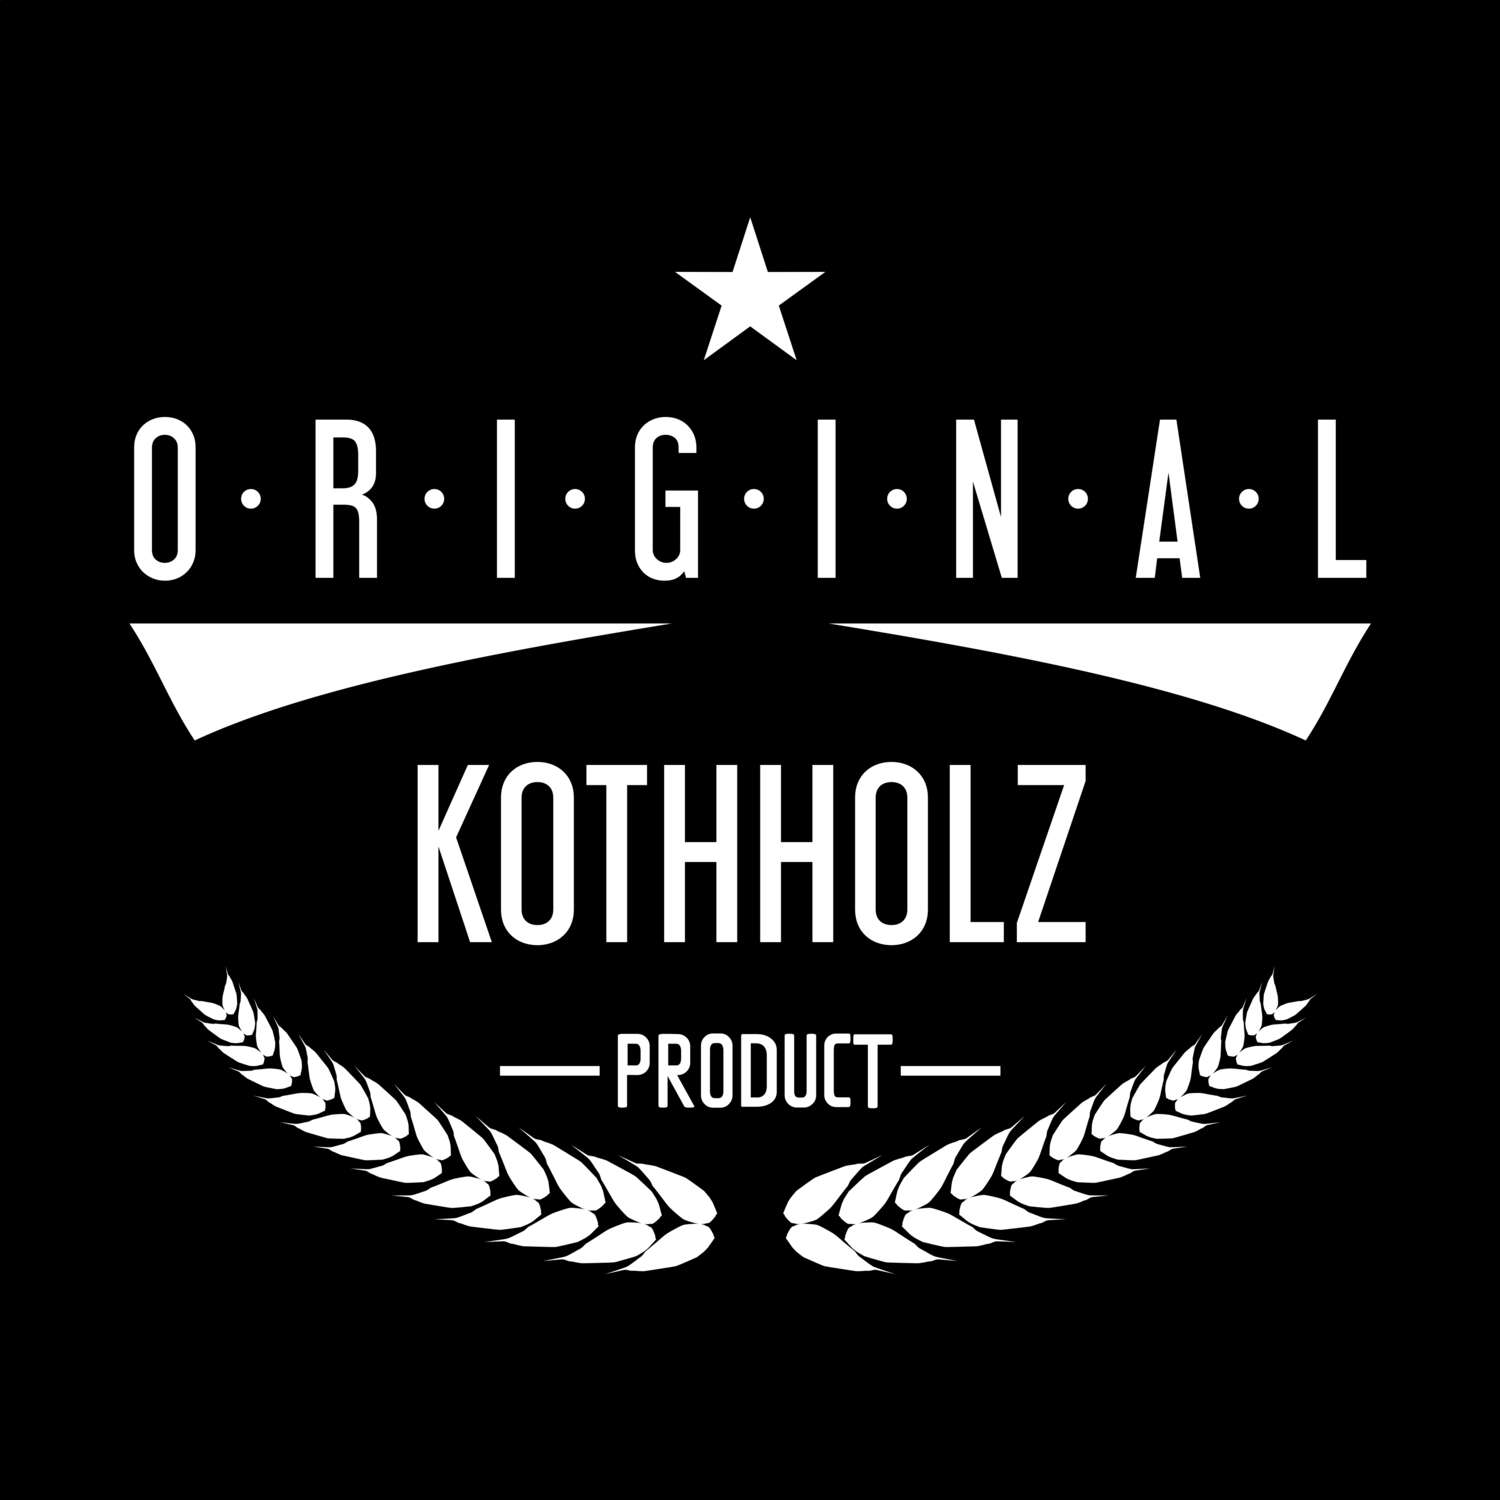 Kothholz T-Shirt »Original Product«